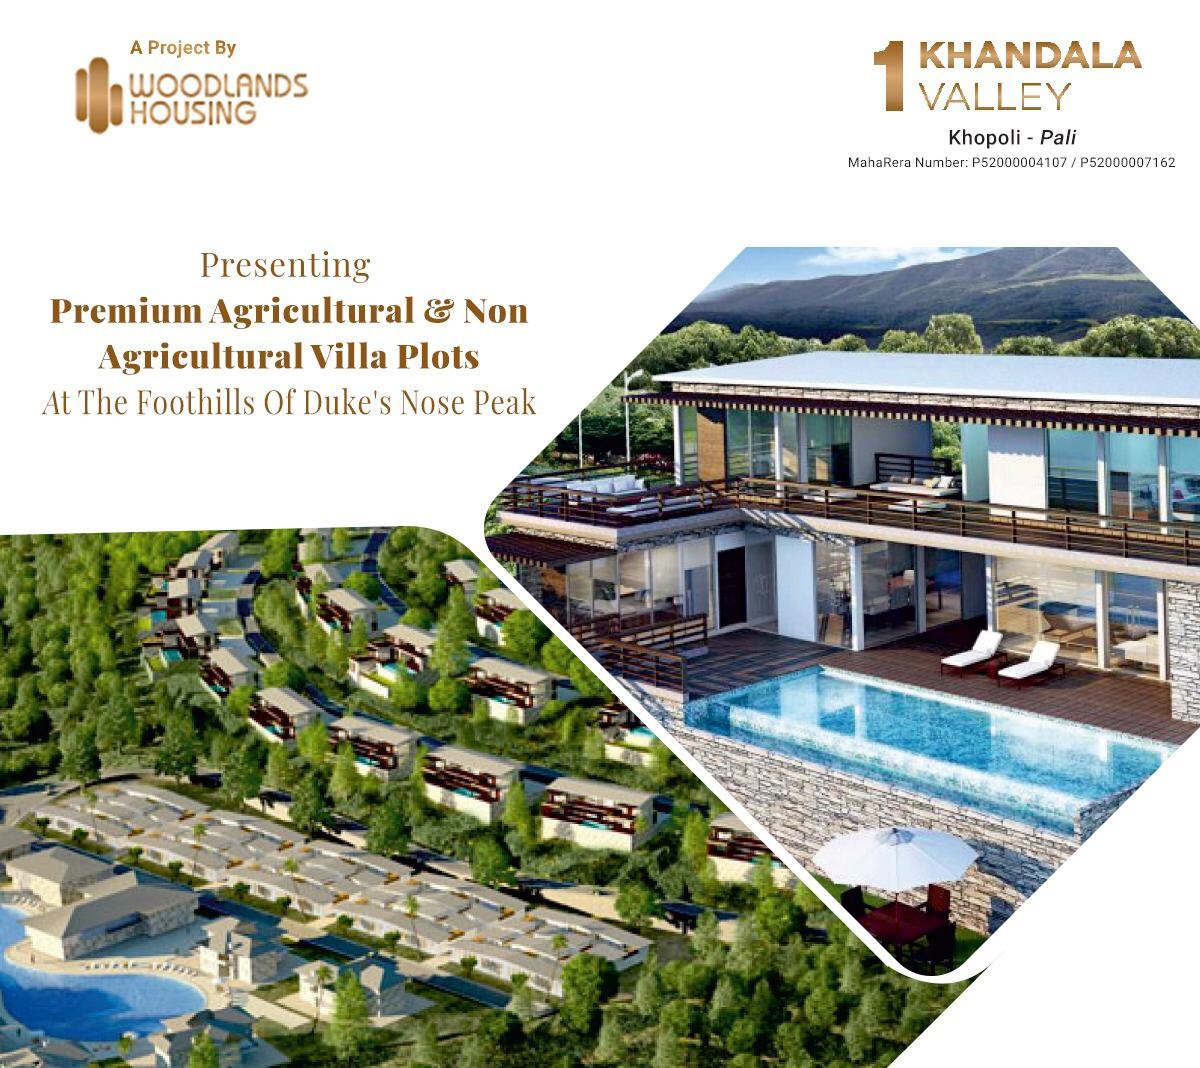 Woodlands 1 Khandala Valley presenting  premium agricultural & non-agricultural villa plots in Mumbai Update